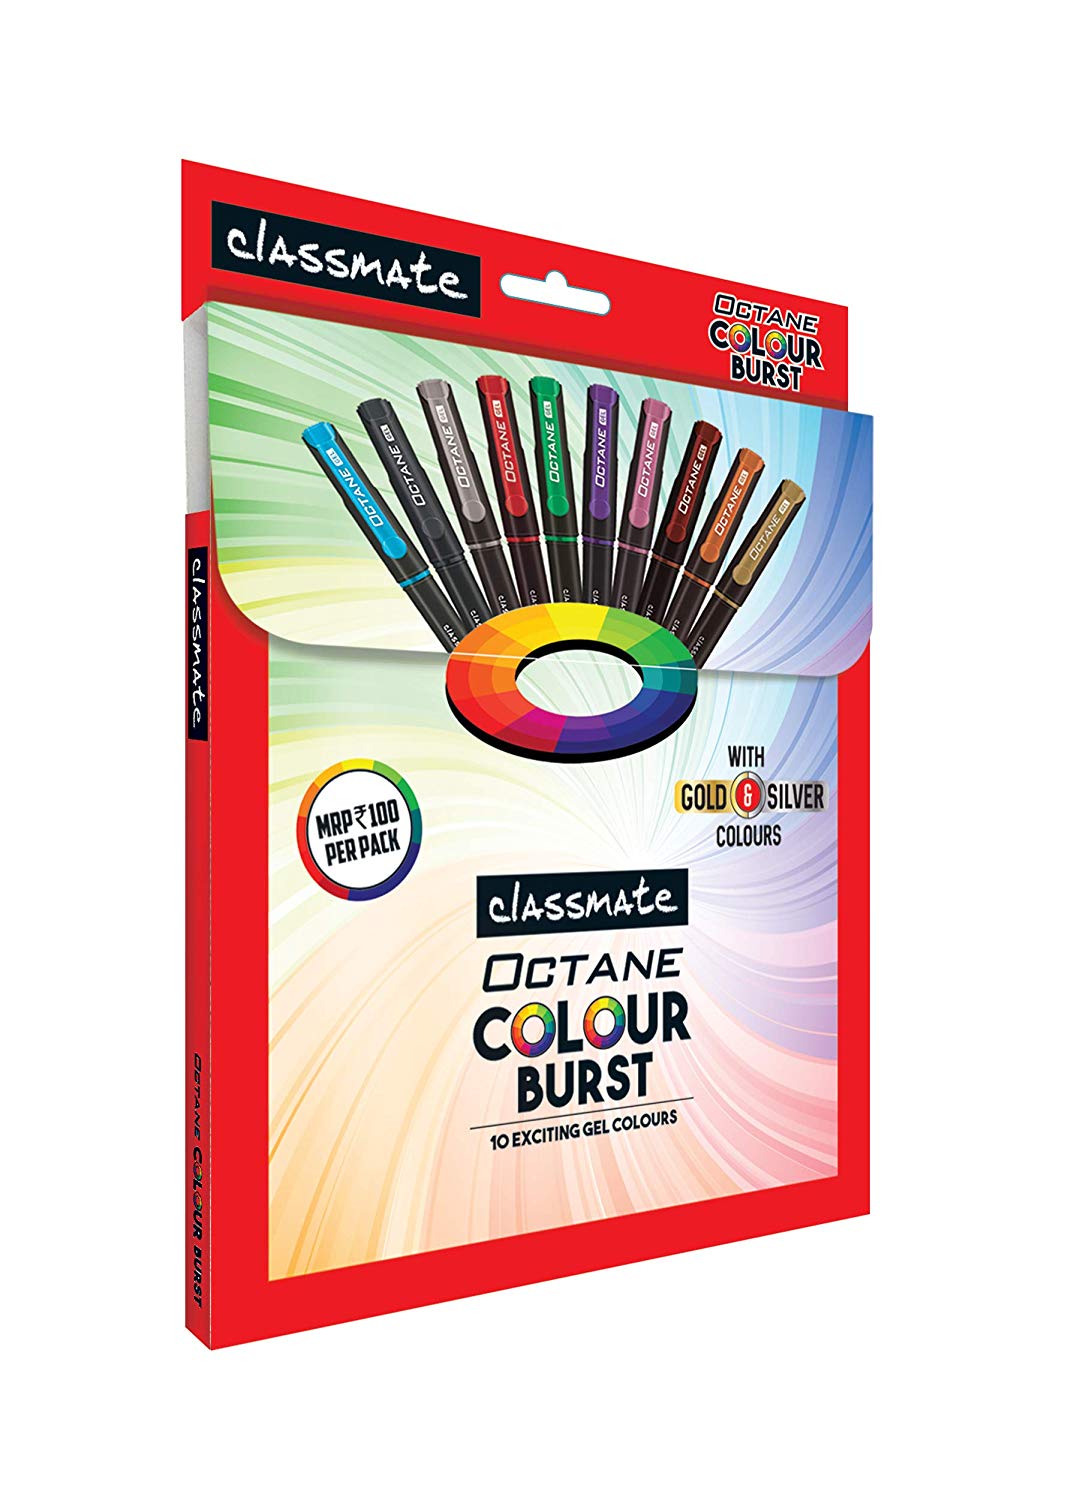 Classmate ITC Octane Colourburst Pen Set - Pack of 10